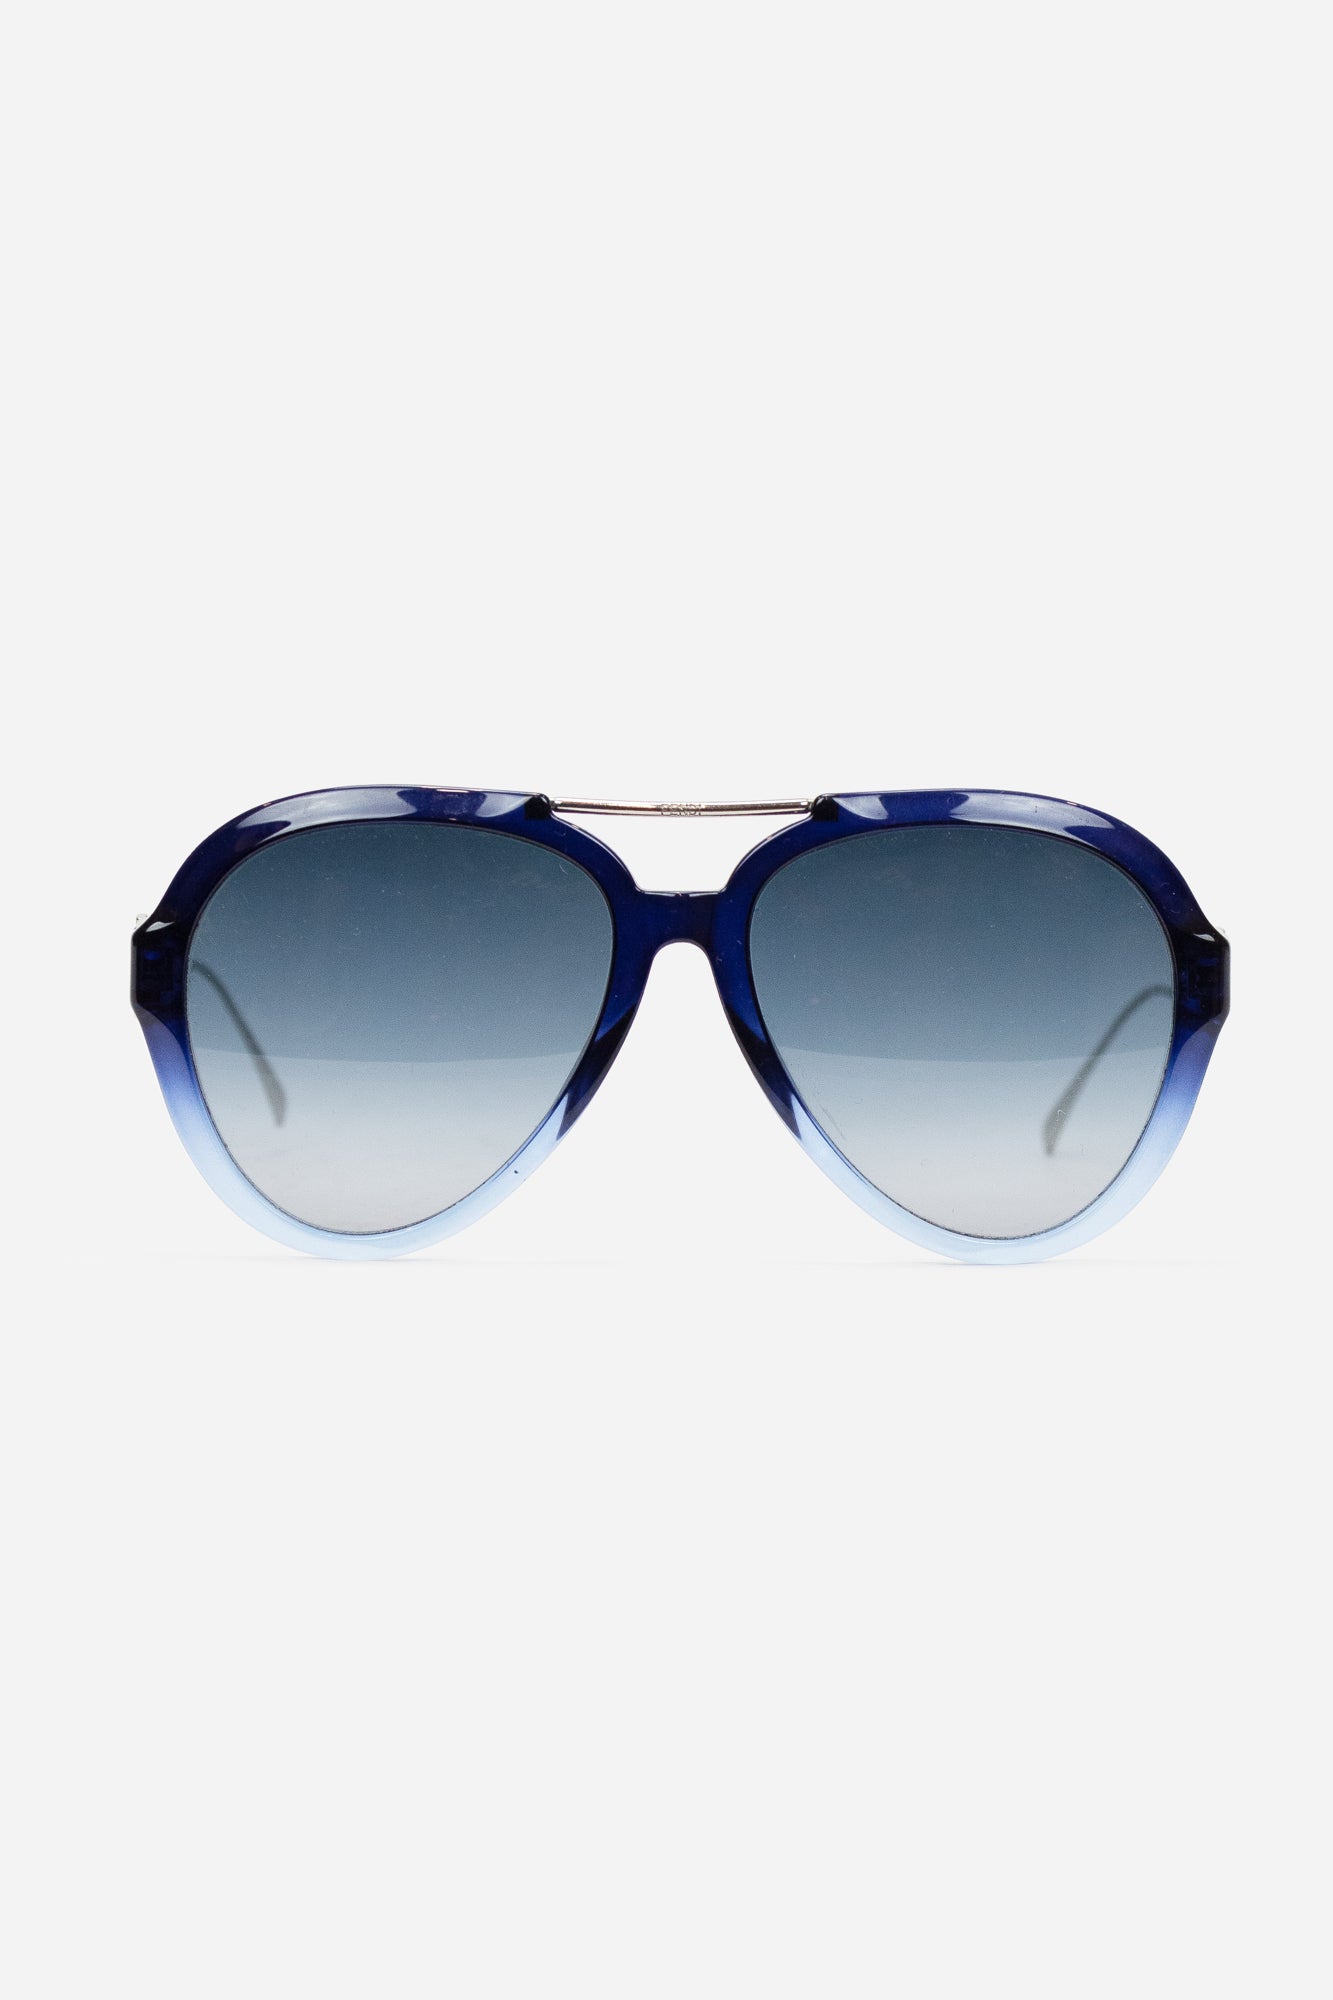 Black and Blue Gradient Lens Aviator Sunglasses